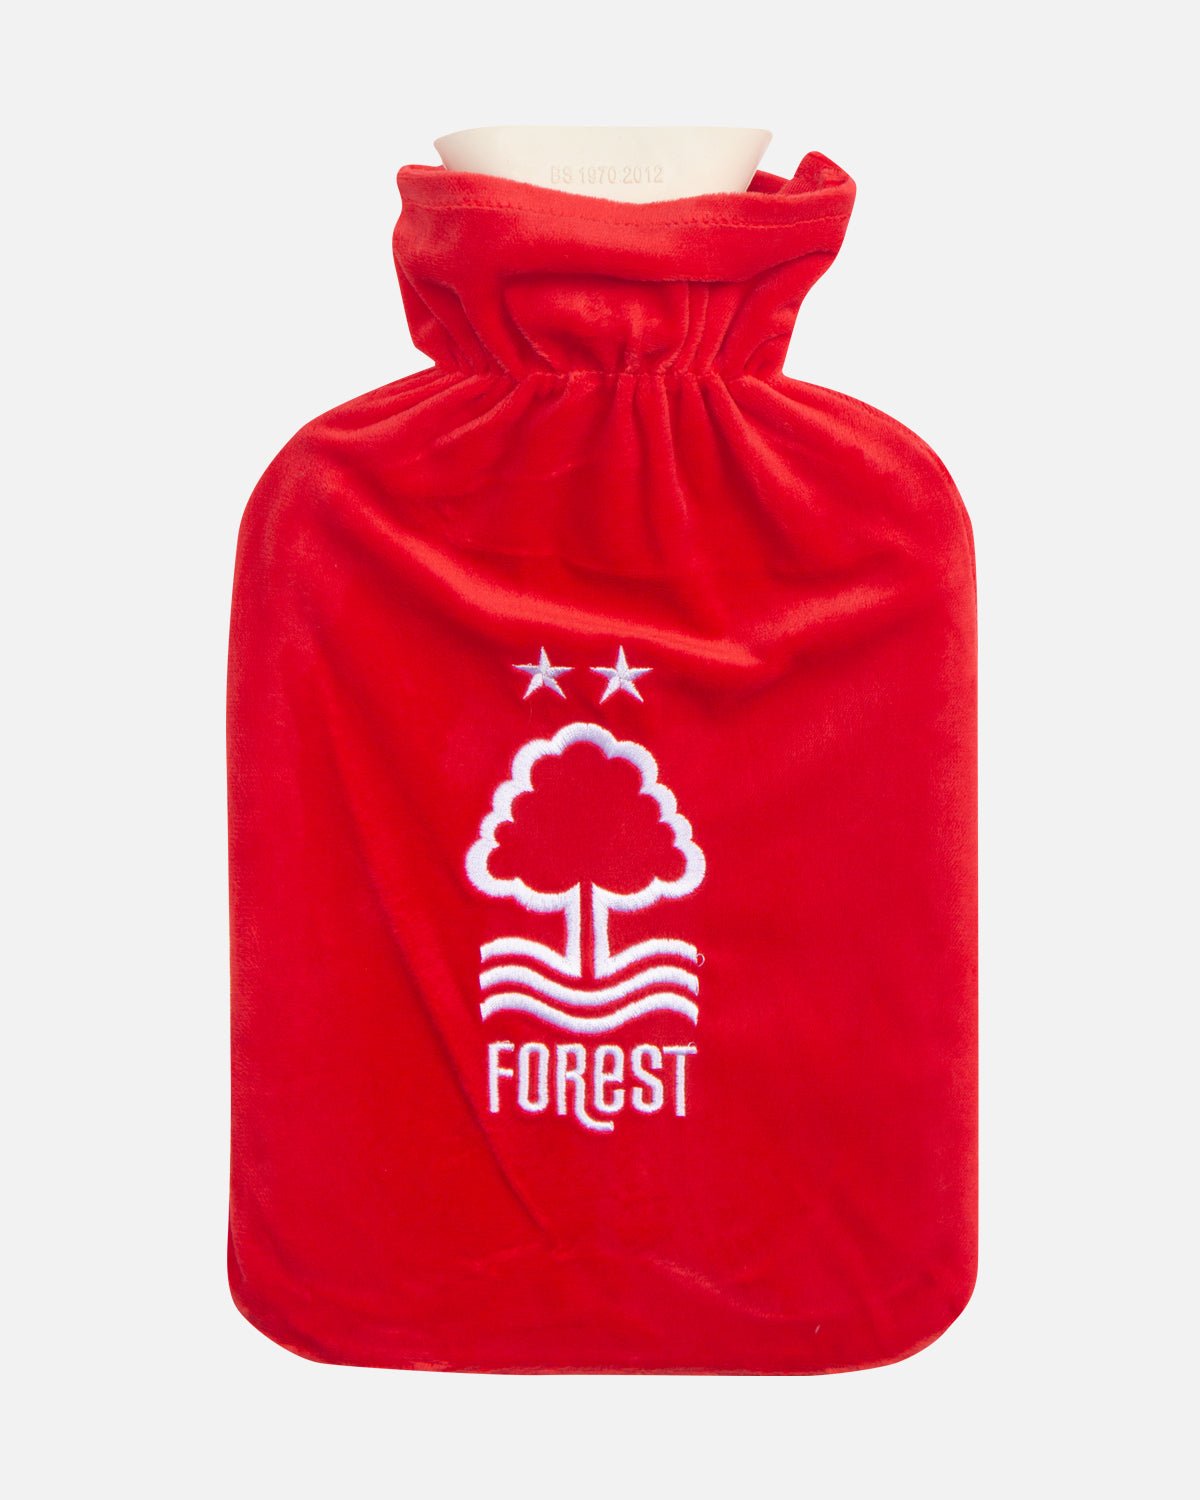 NFFC Hot Water Bottle - Nottingham Forest FC